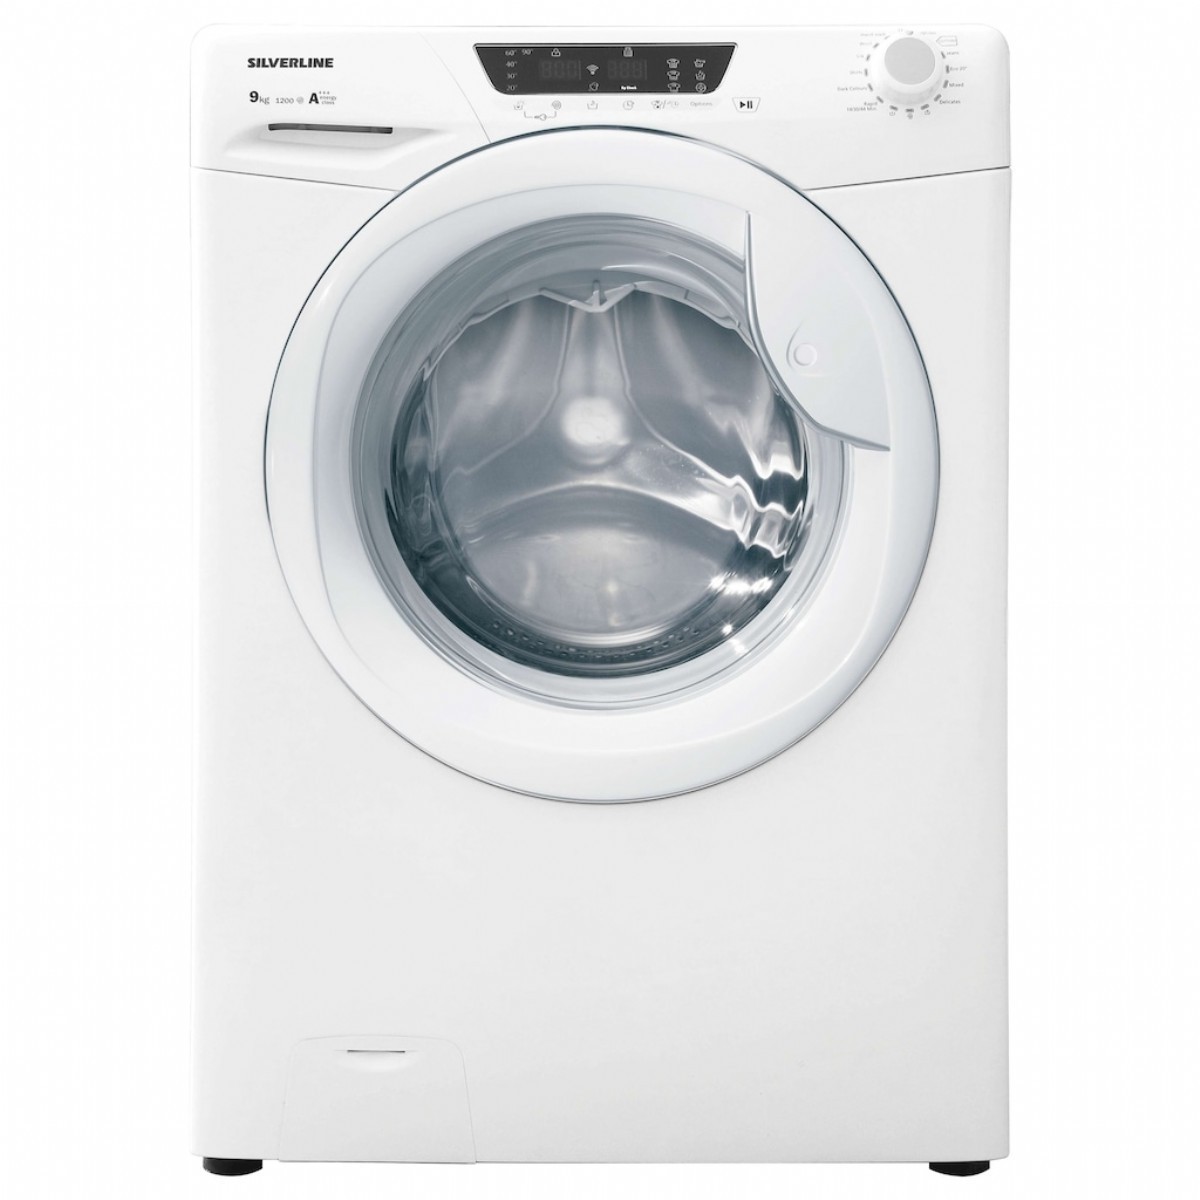 Çamaşır Makineleri | Silverline WM14028W01 A+++ 1200 Devir 9 kg Çamaşır Makinesi | WM14028W01 | Silverline, silverline çamaşır makinesi, wm14028w01, WM14028W01, 9 KG çamaşır makinesi | 